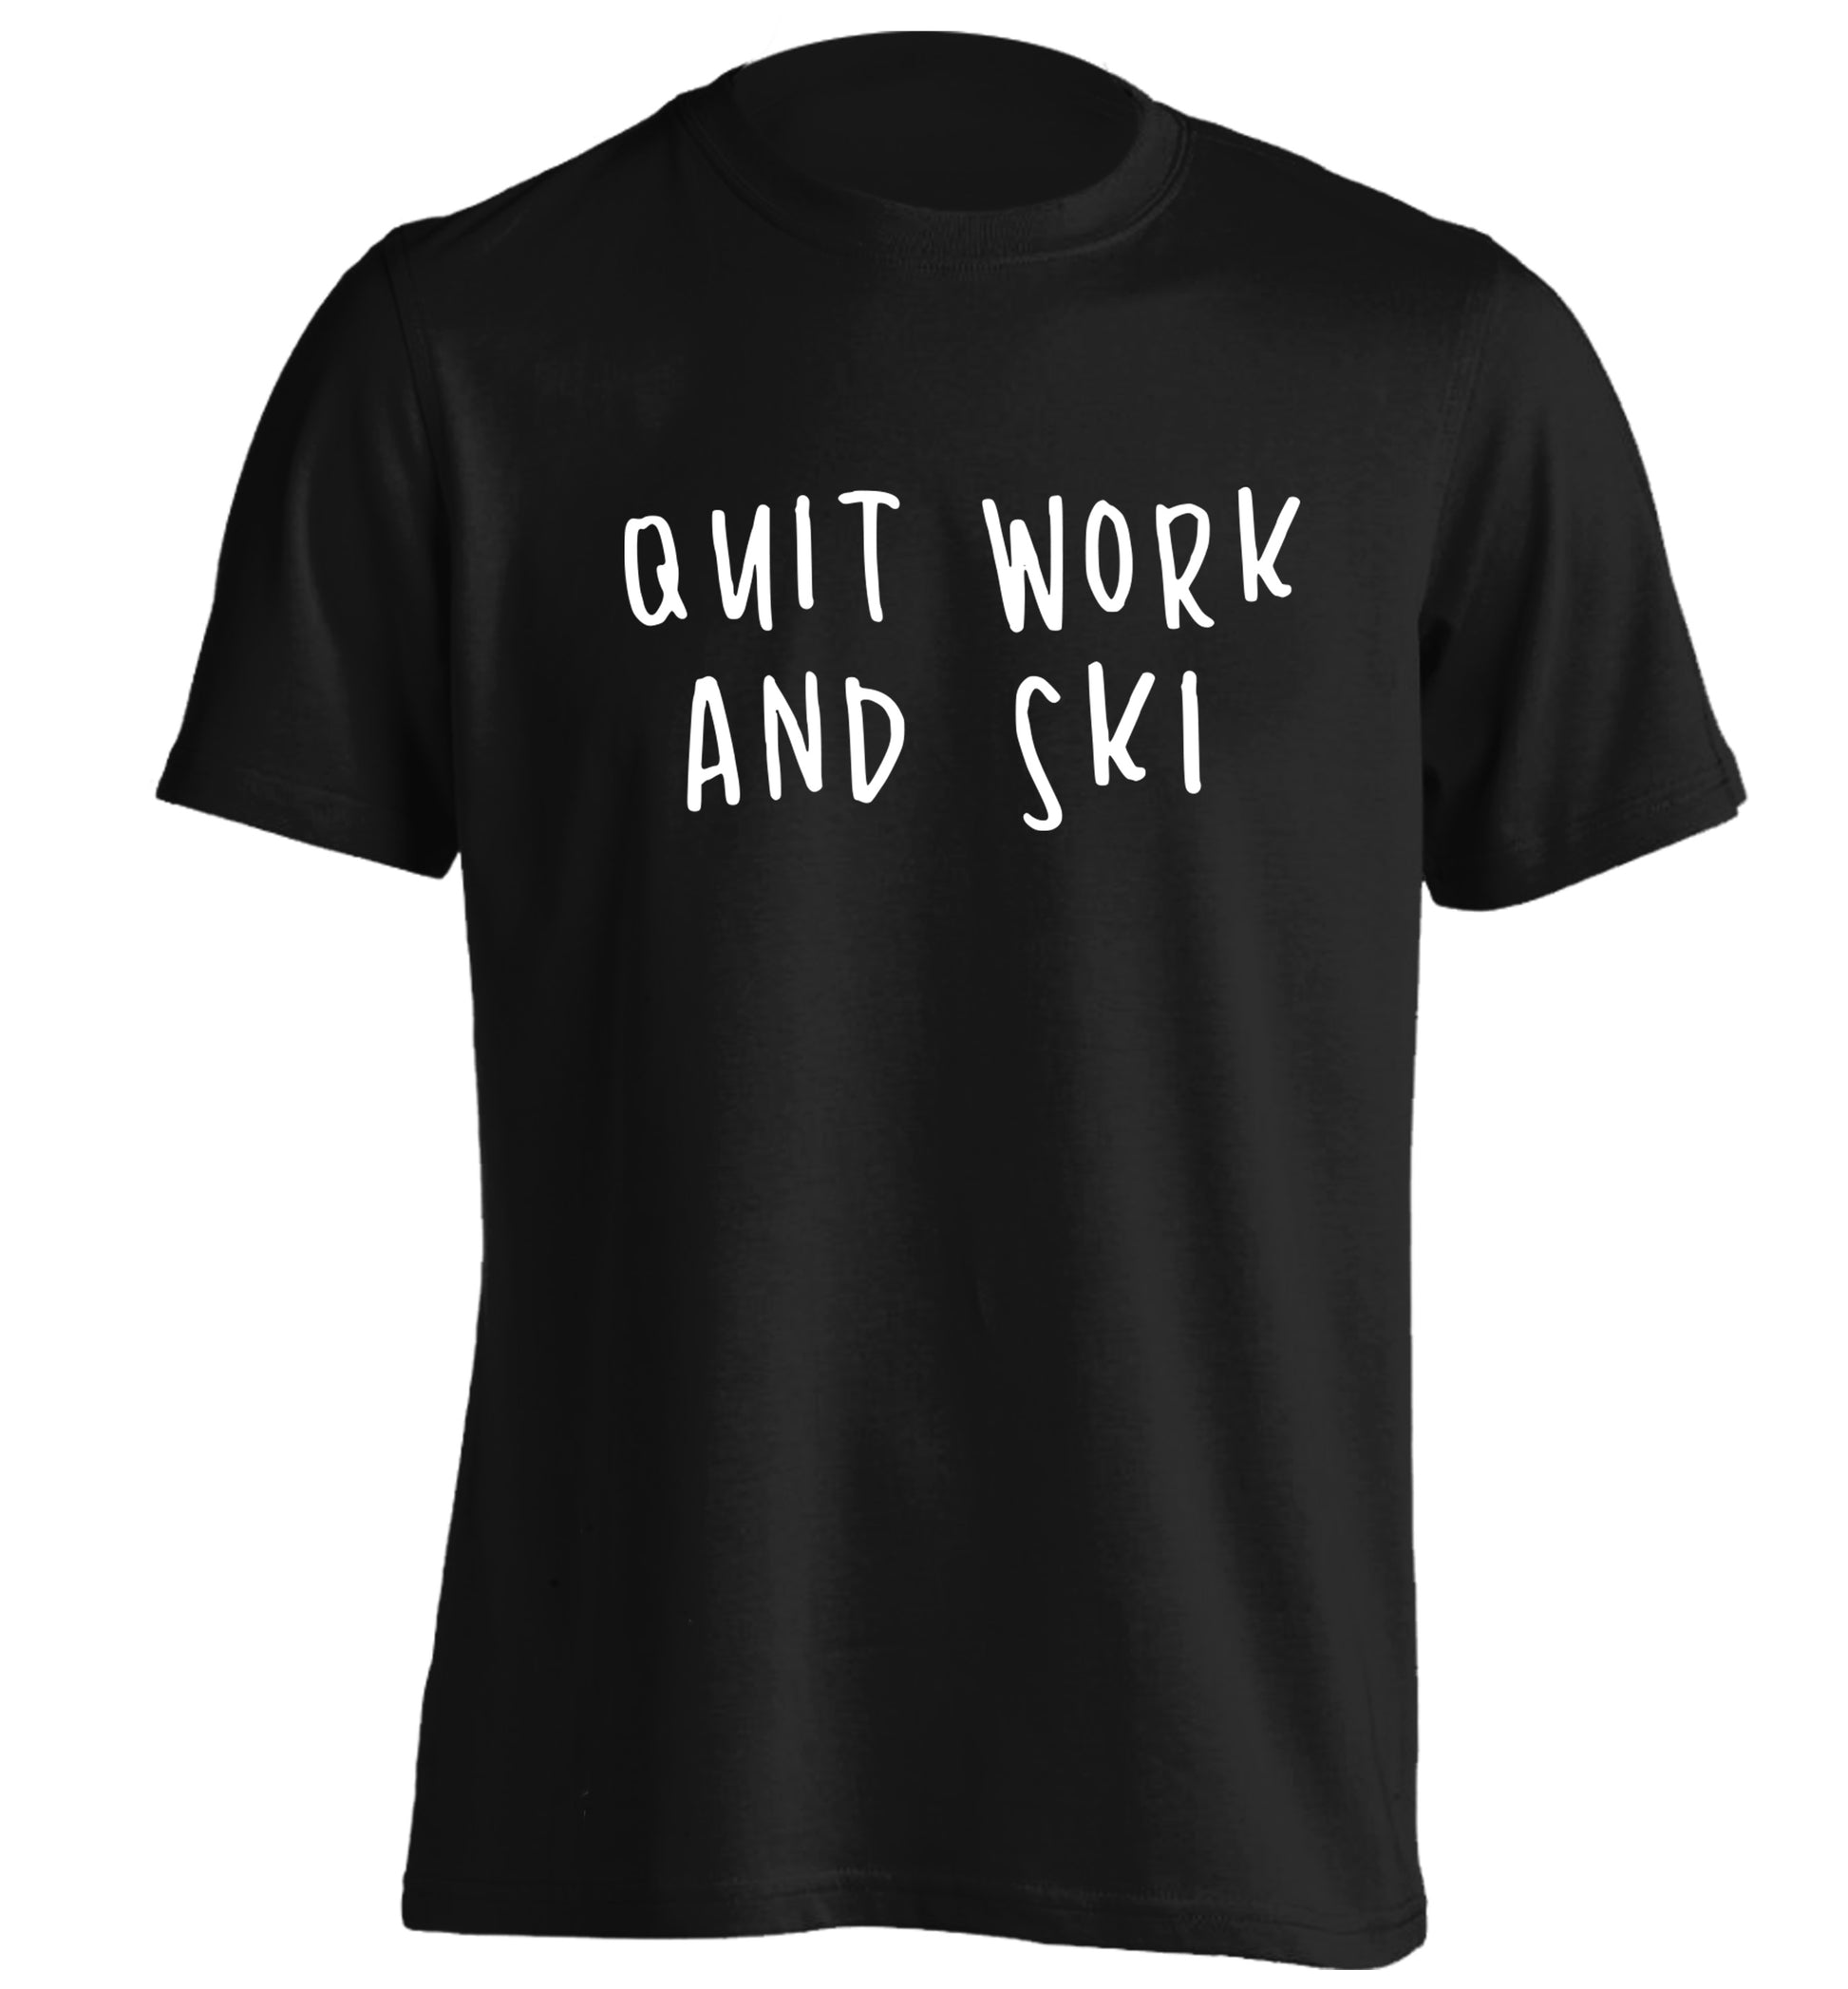 Quit work and ski adults unisexblack Tshirt 2XL